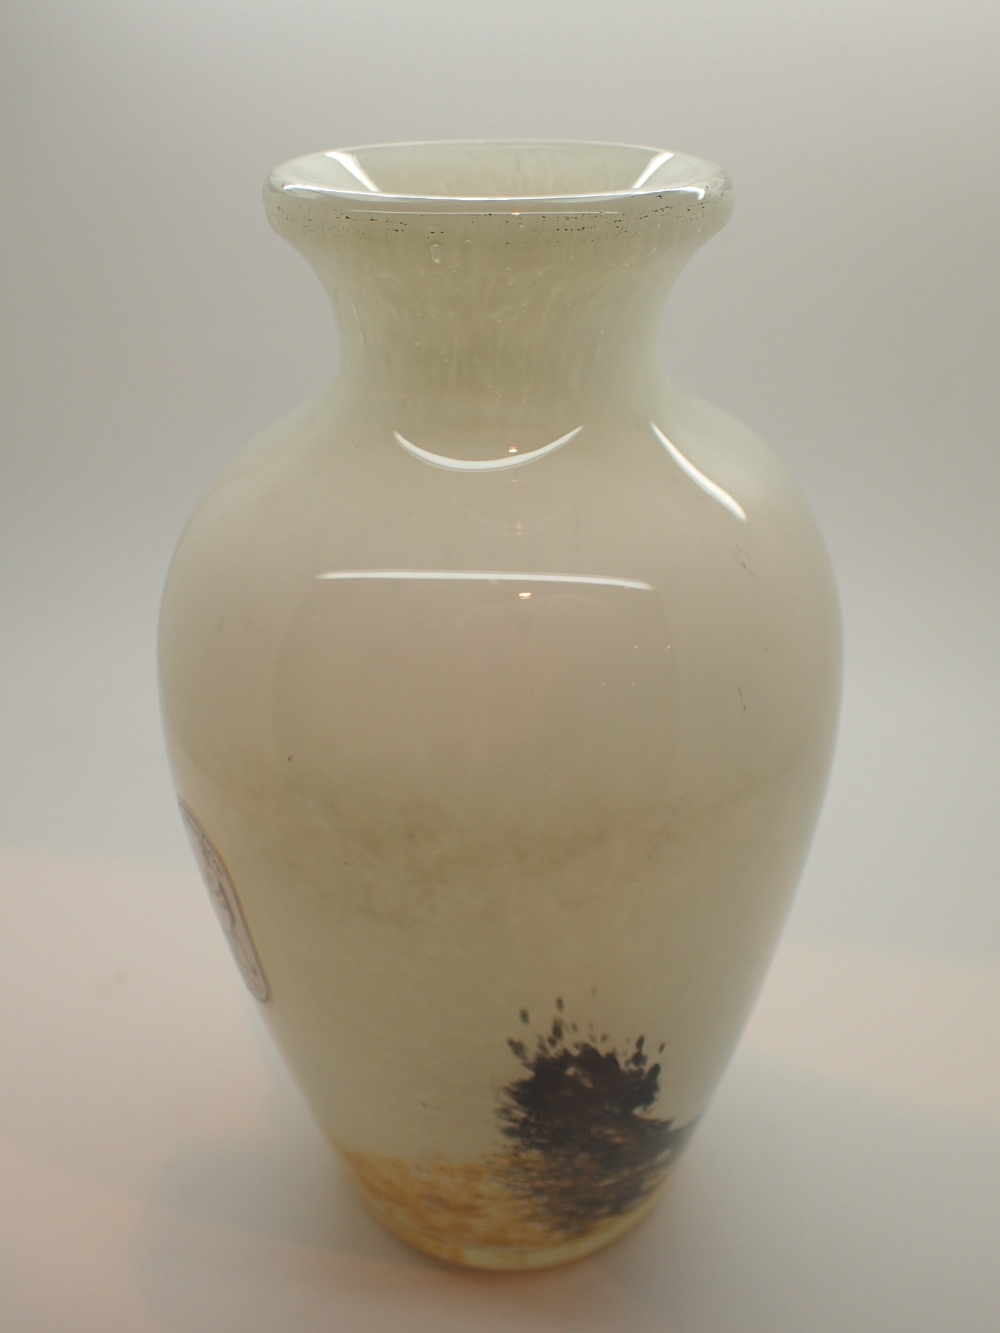 La Rochere French Art Deco style hand blown pate de verre glass vase with paper label inscribed to